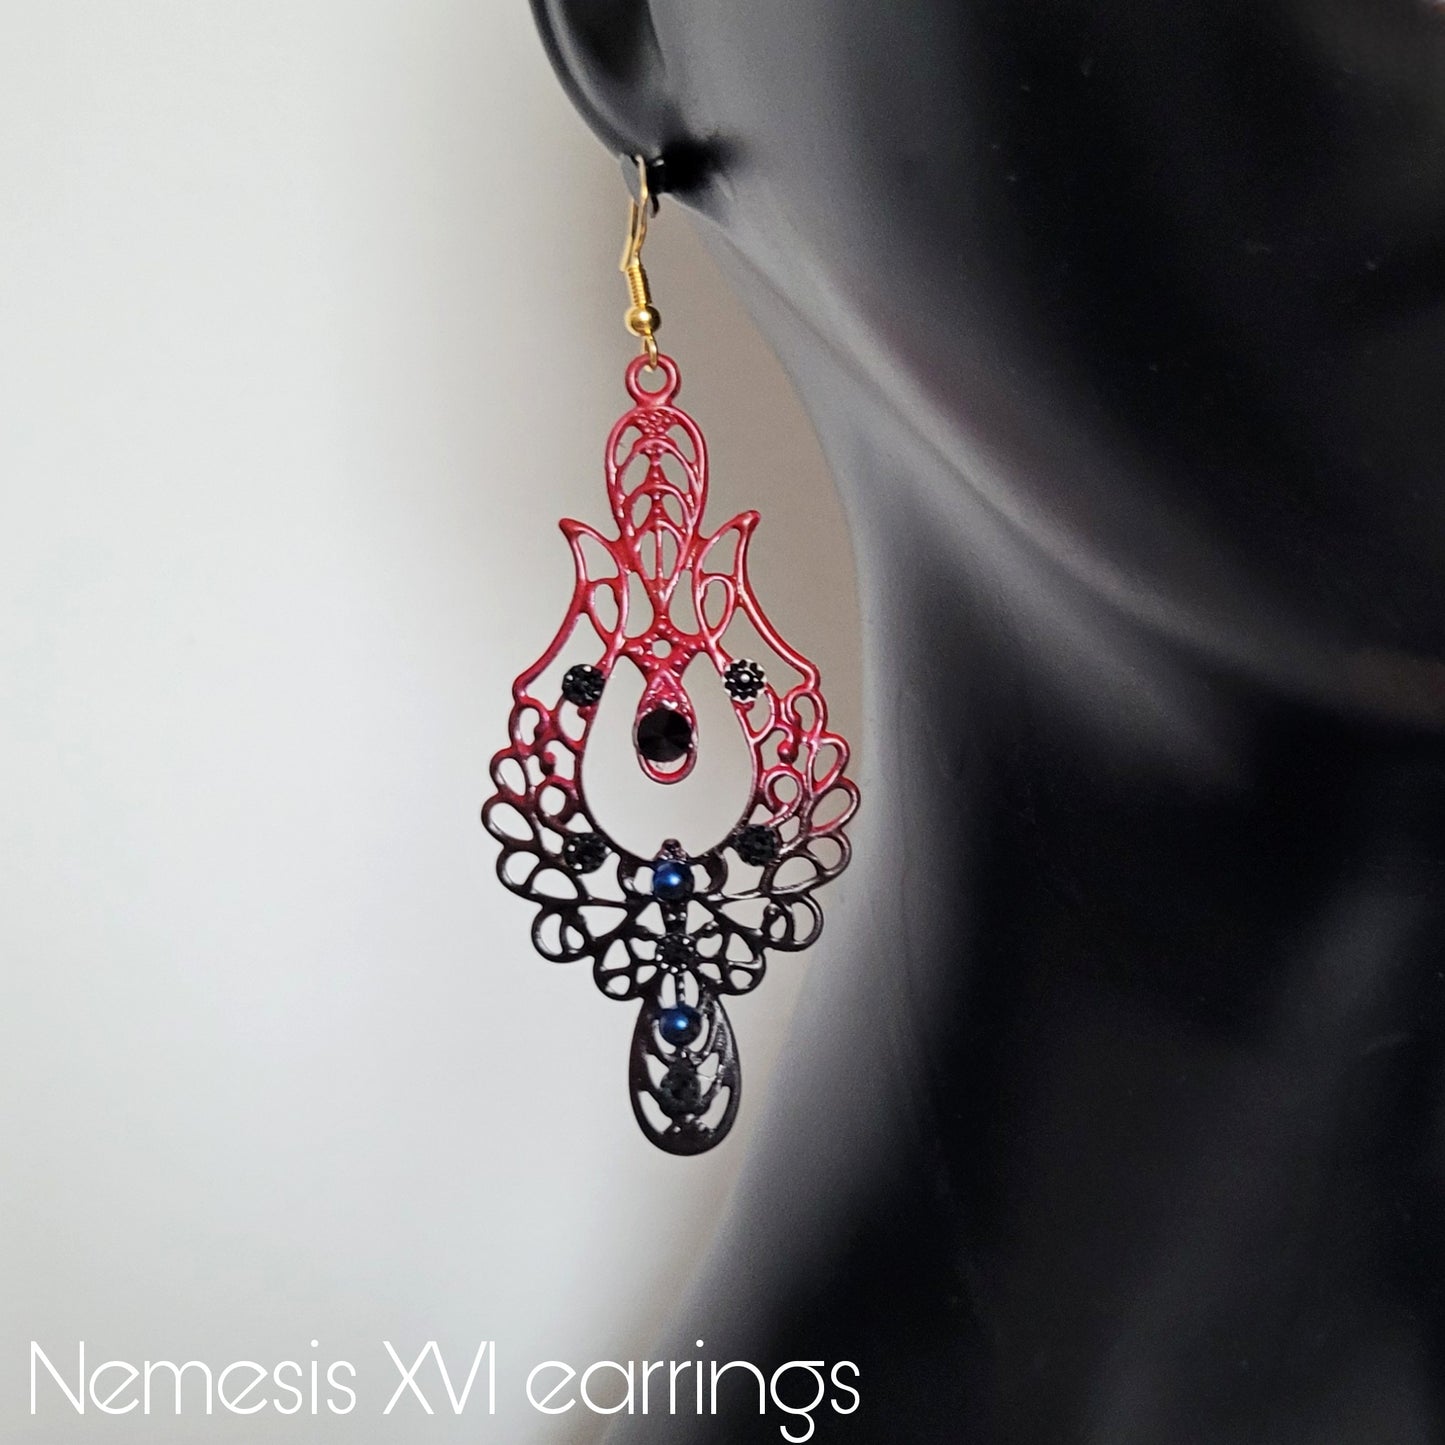 Deusa ex Machina collection: The Nemesis earrings